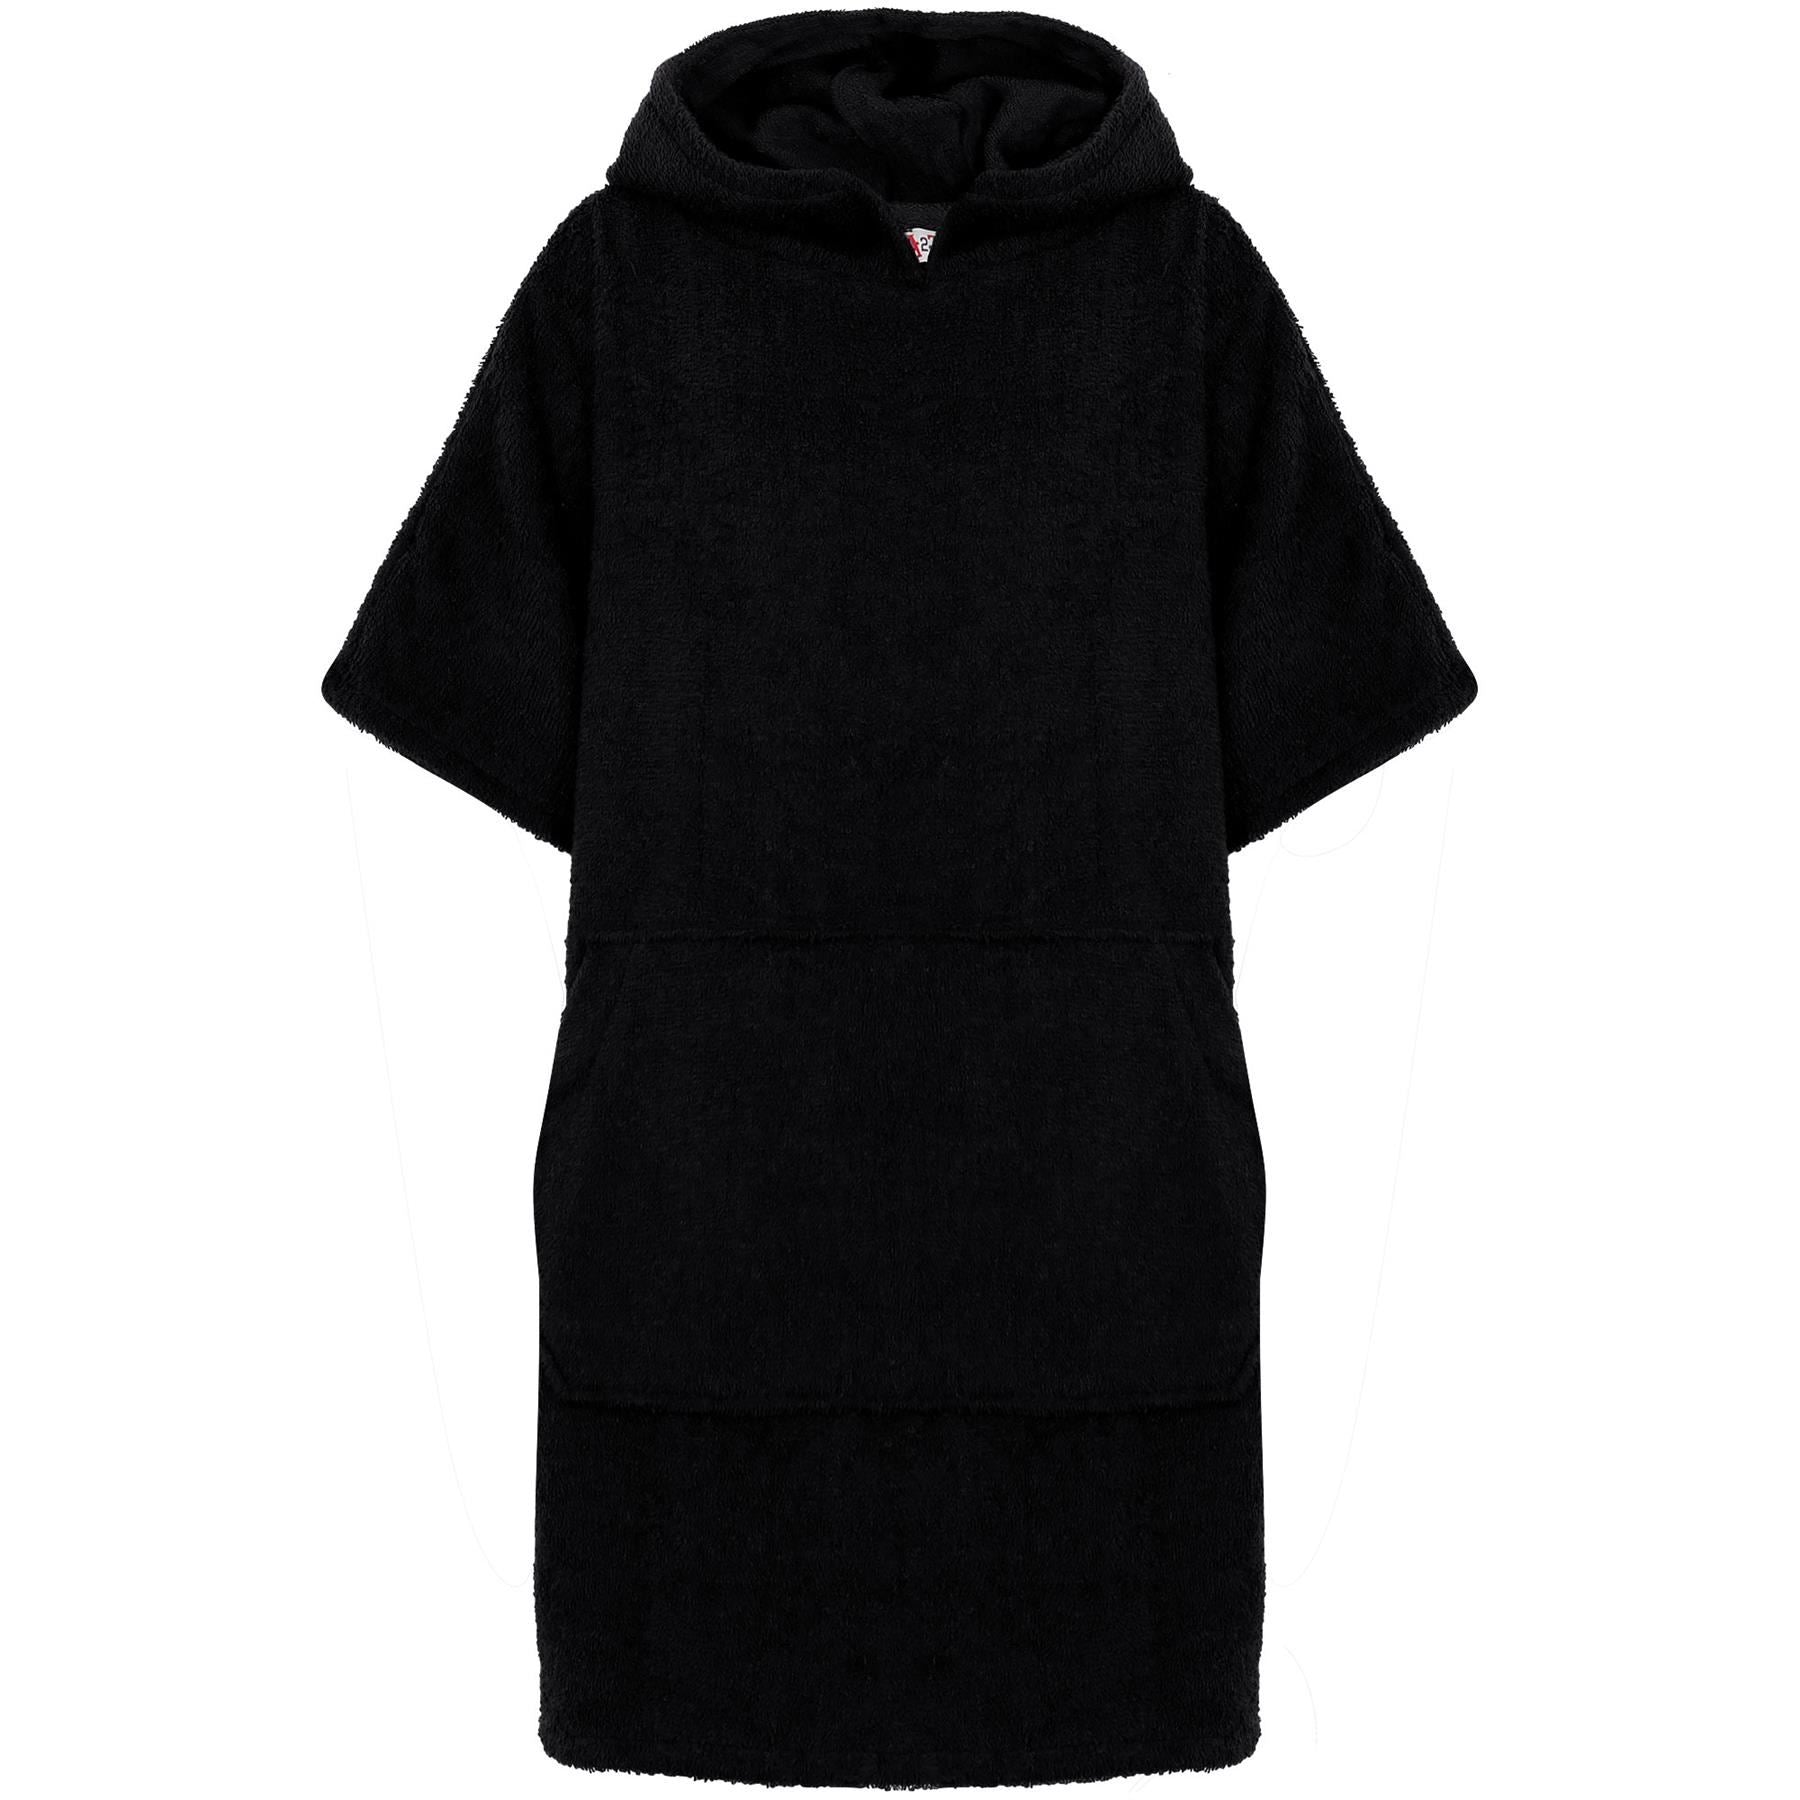 Kids Bathrobe 100% Cotton Black Hooded Bathing Dressing Gown Unisex 2-13 Y